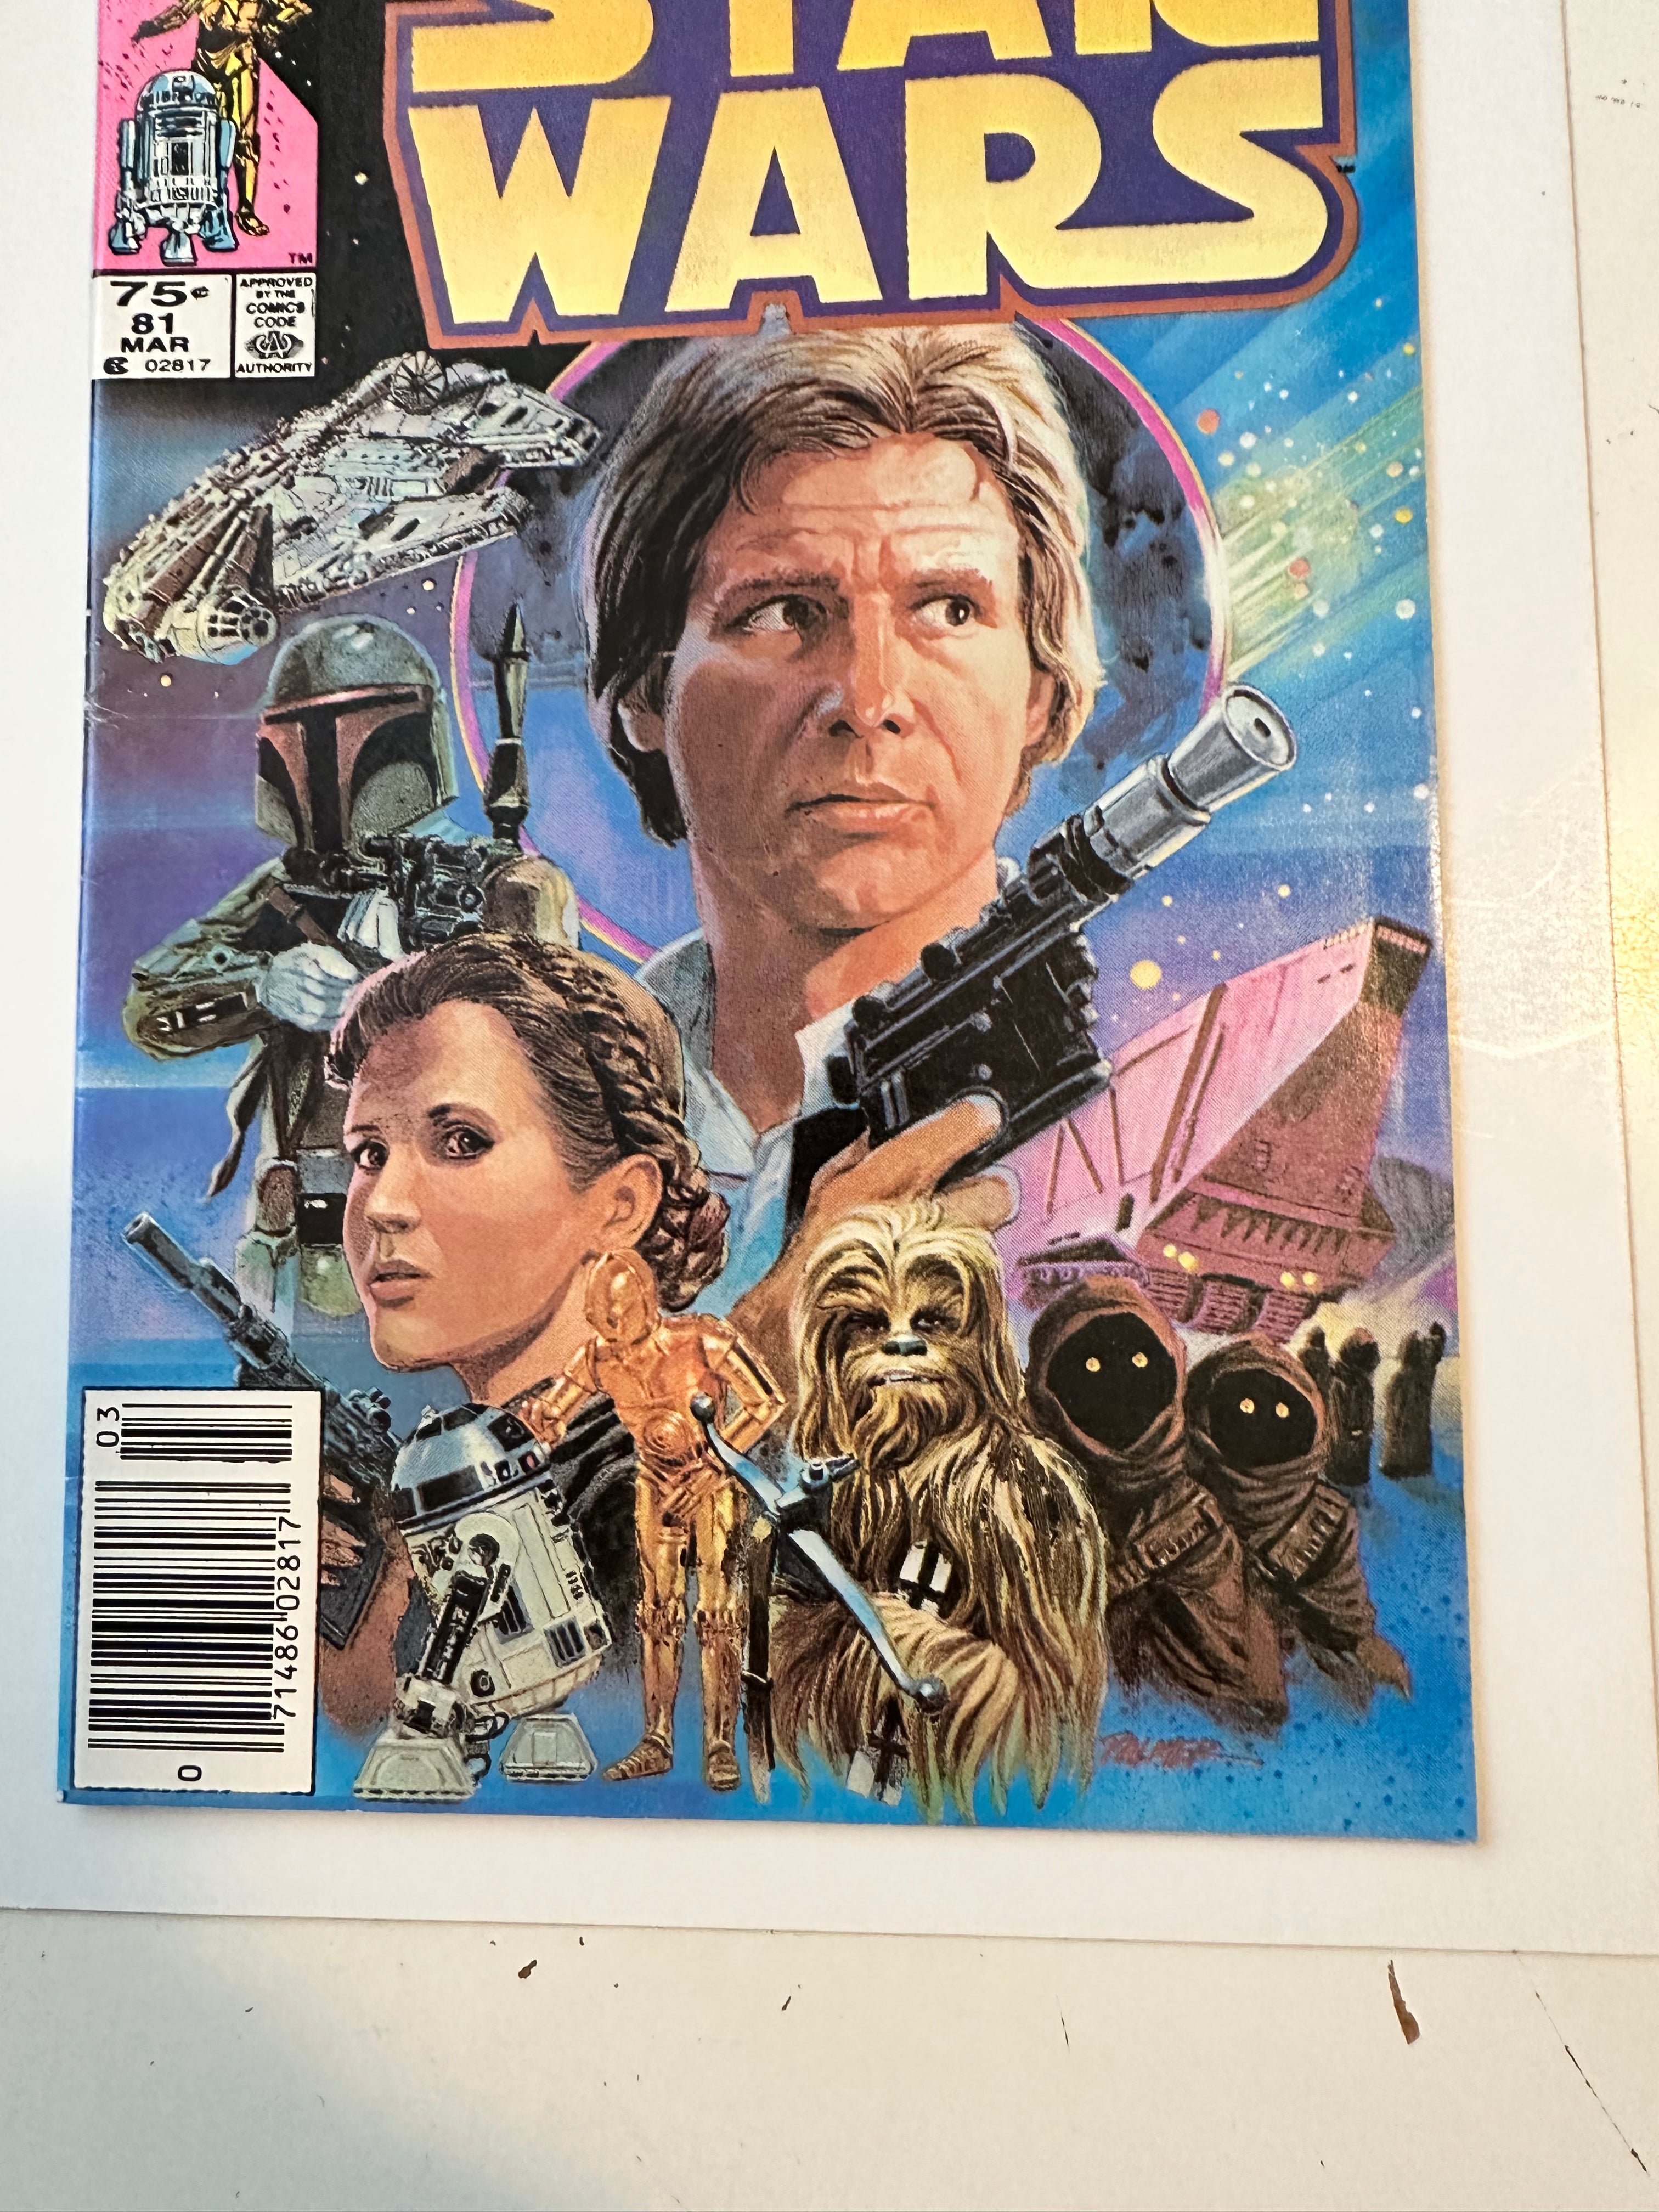 Star Wars comic #81 Boba Fett key issue comic book 1984